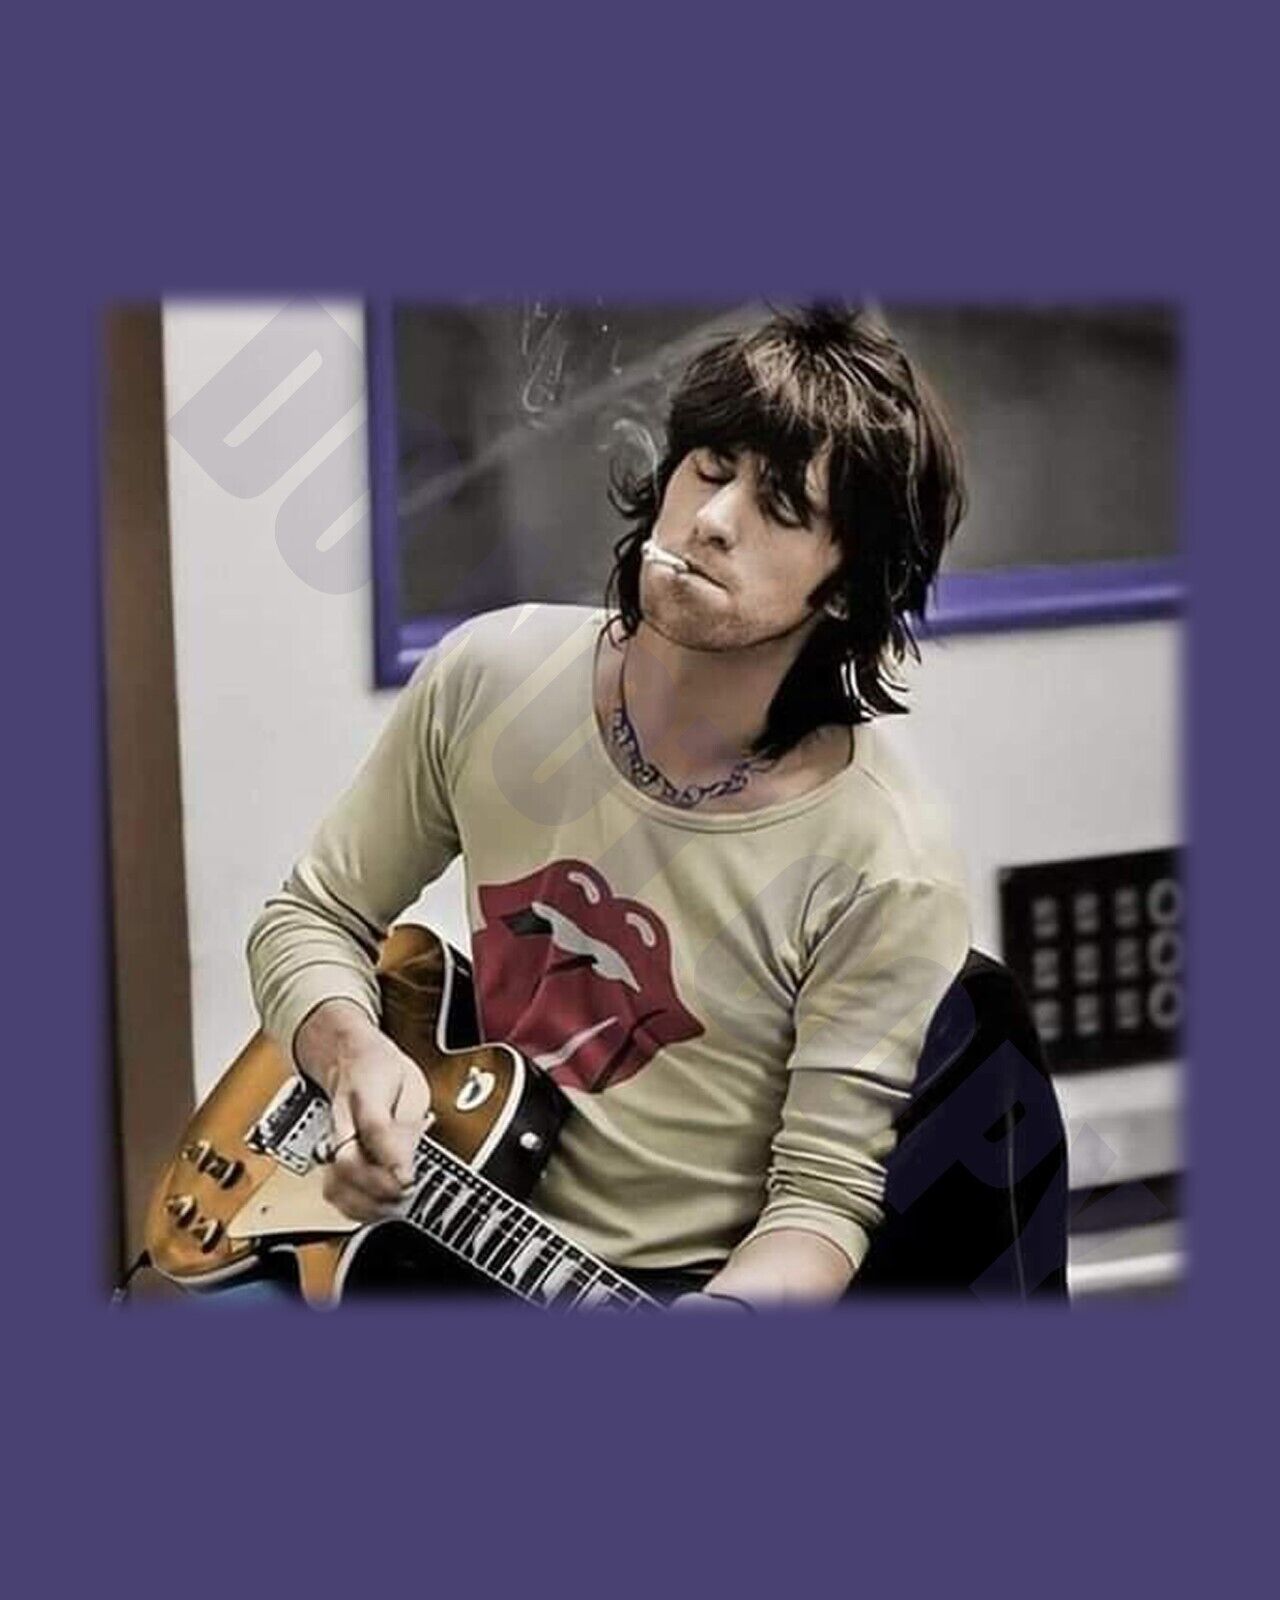 KEITH RICHARDS Rolling Stones Playing Guitar Smoking T-shirt 8x10 Photo